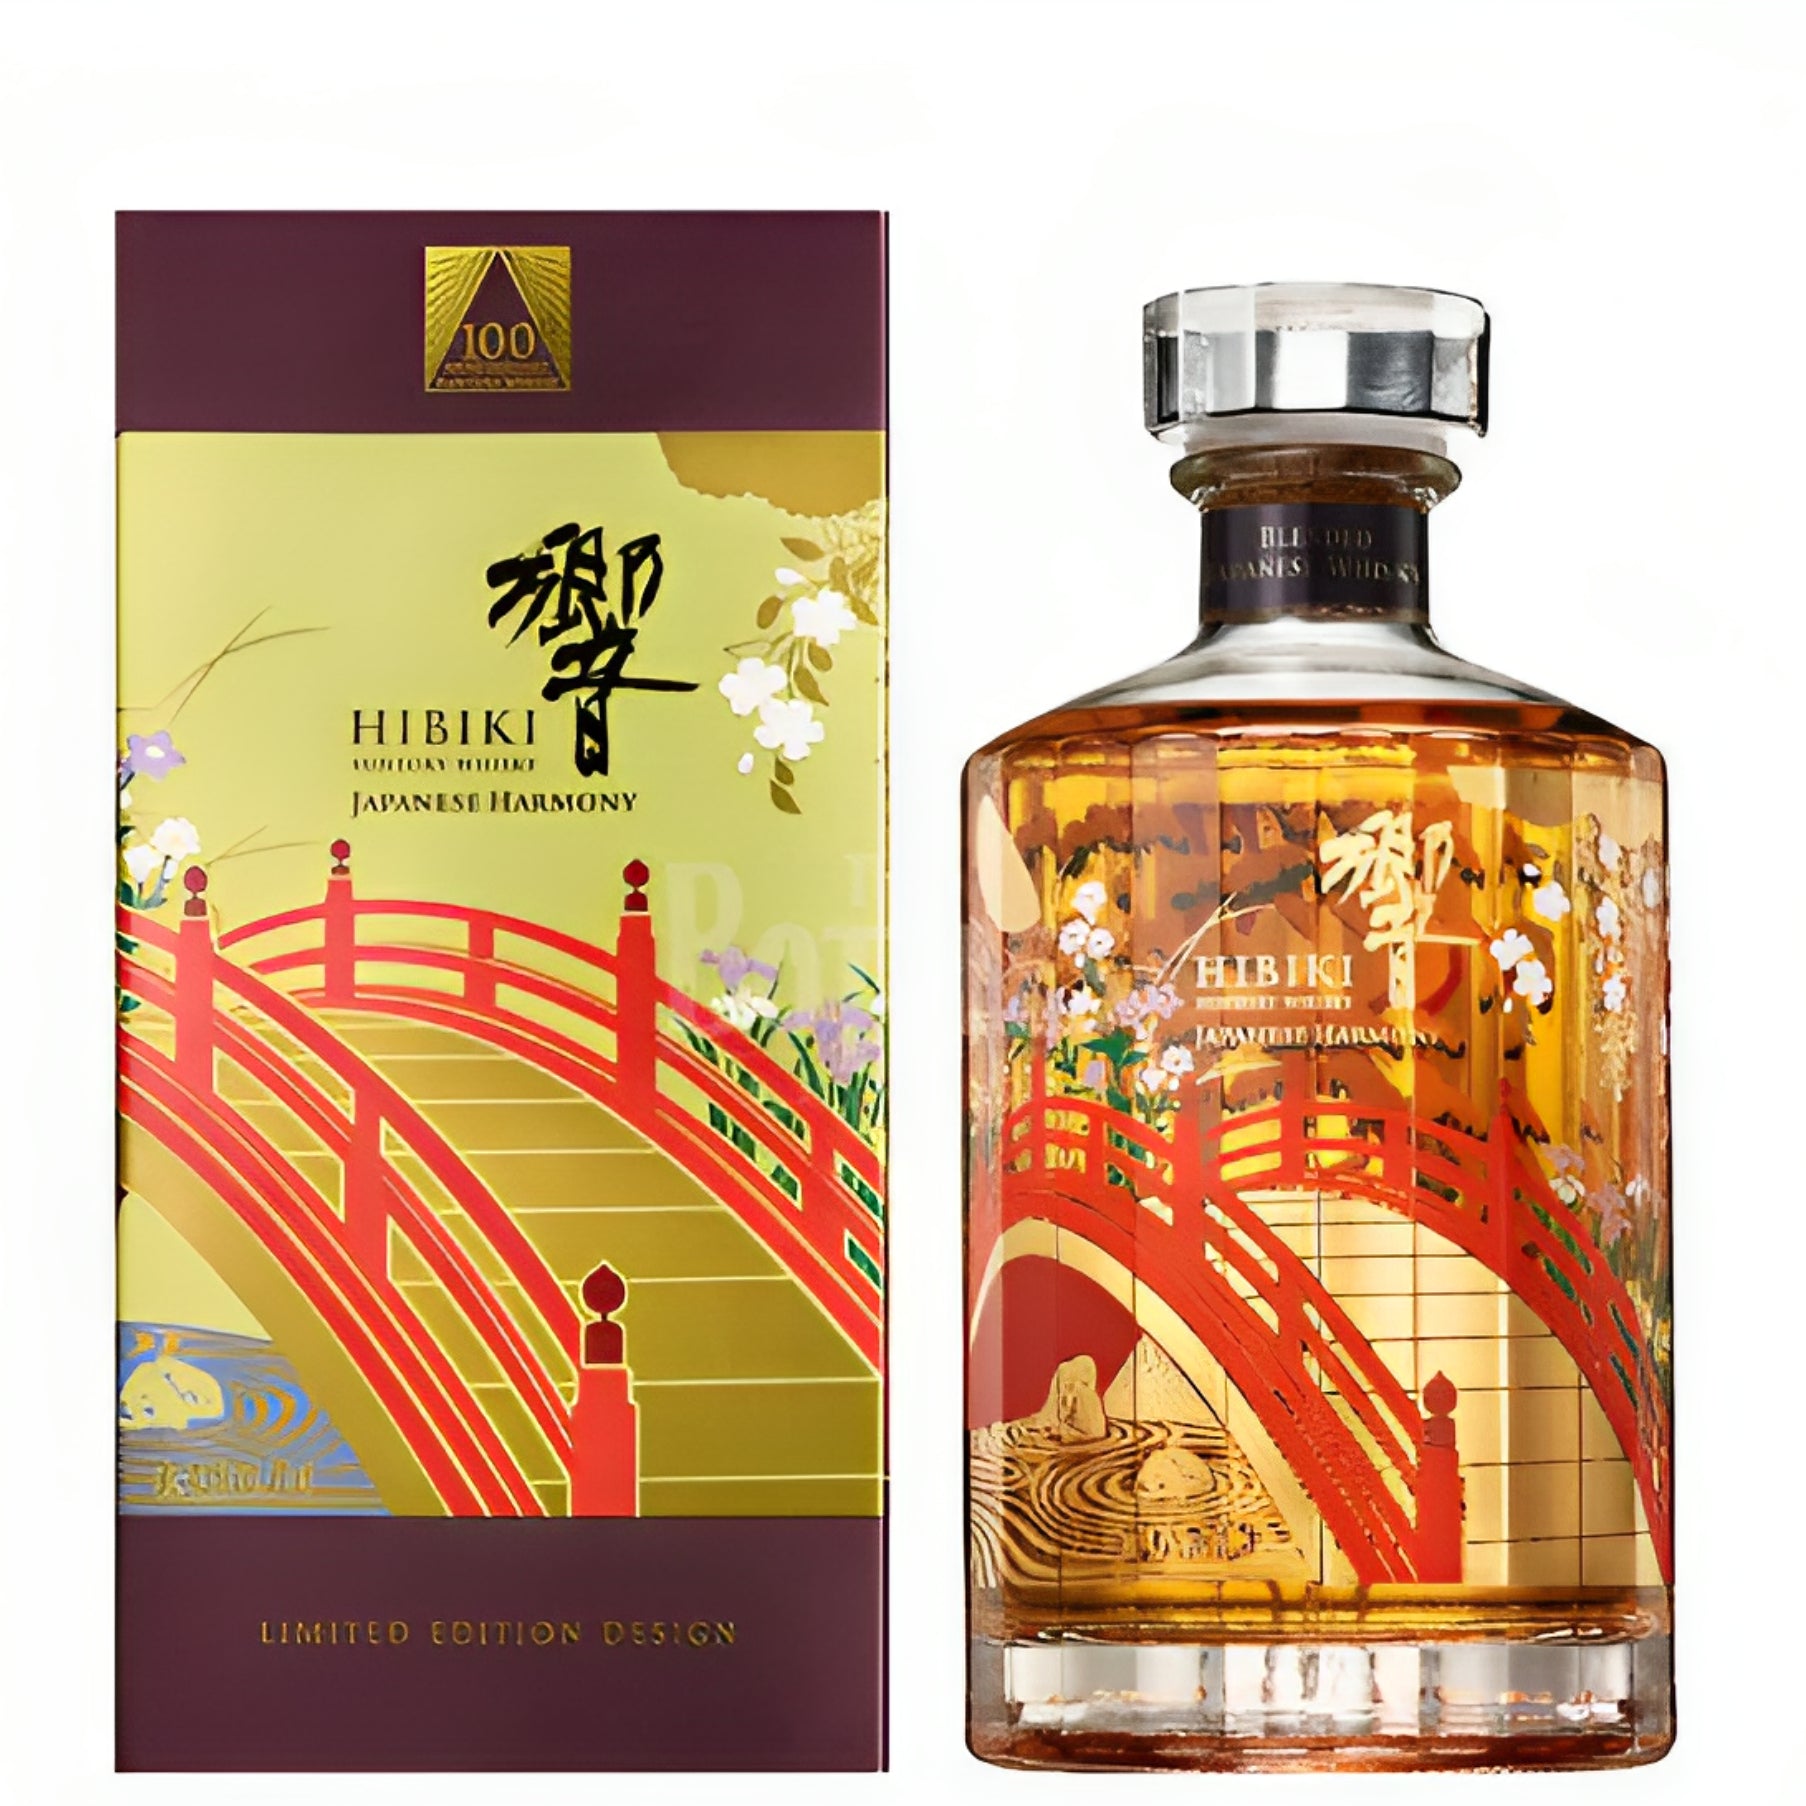 Hibiki Japanese Harmony Suntory 100th Anniversary Limited Edition 750ml